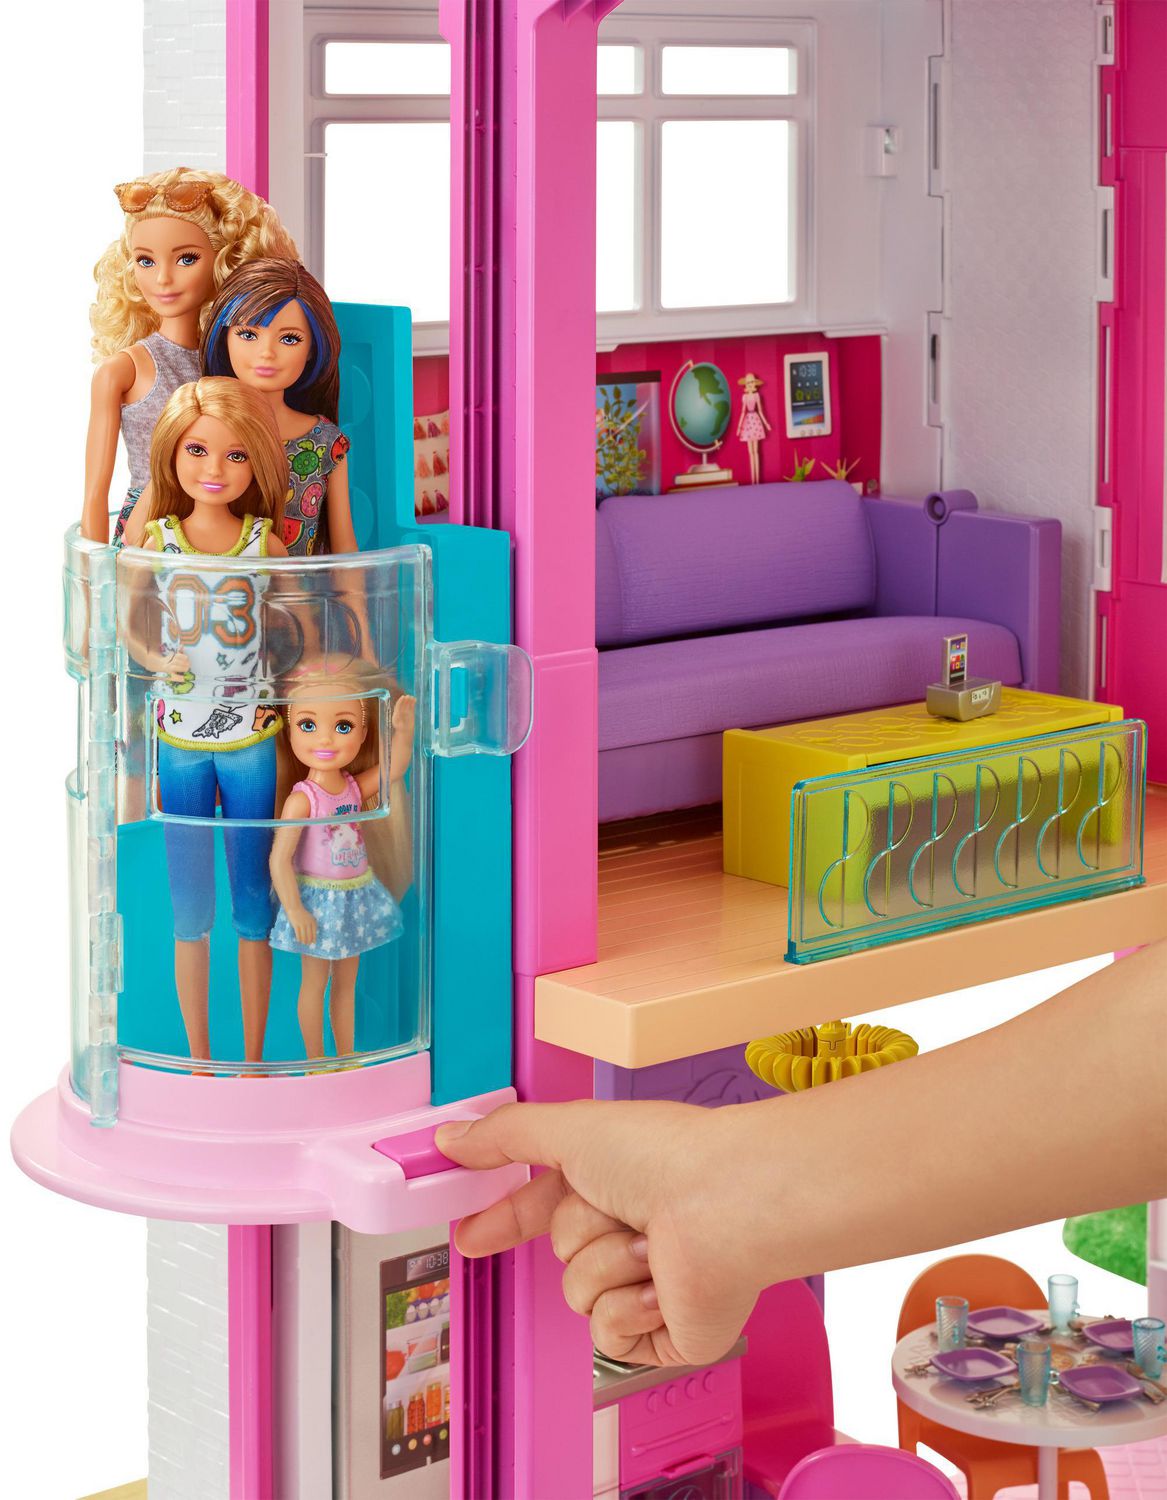 barbie house canada